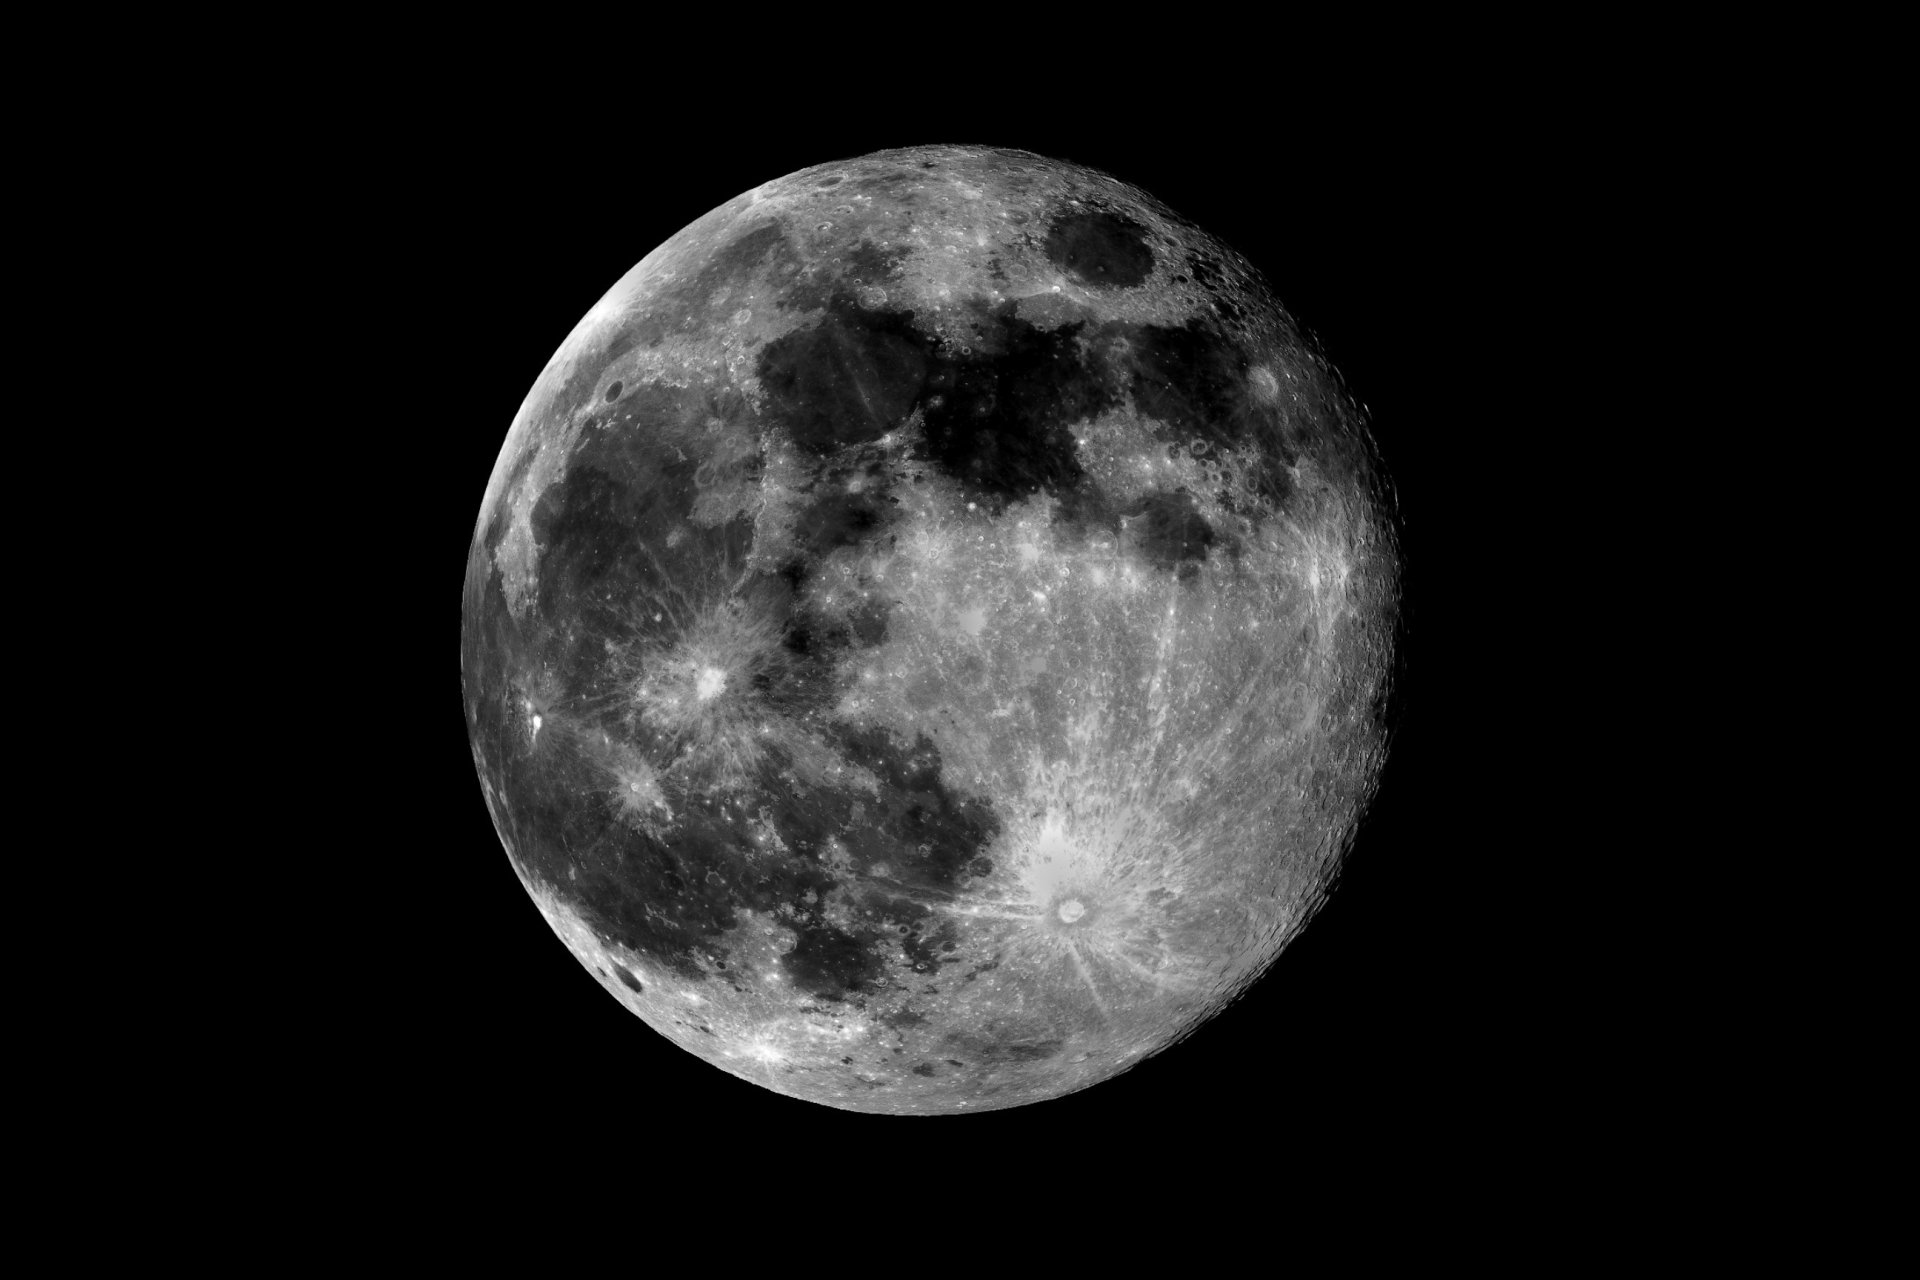 wallpaper lua,moon,photograph,monochrome photography,black and white,nature